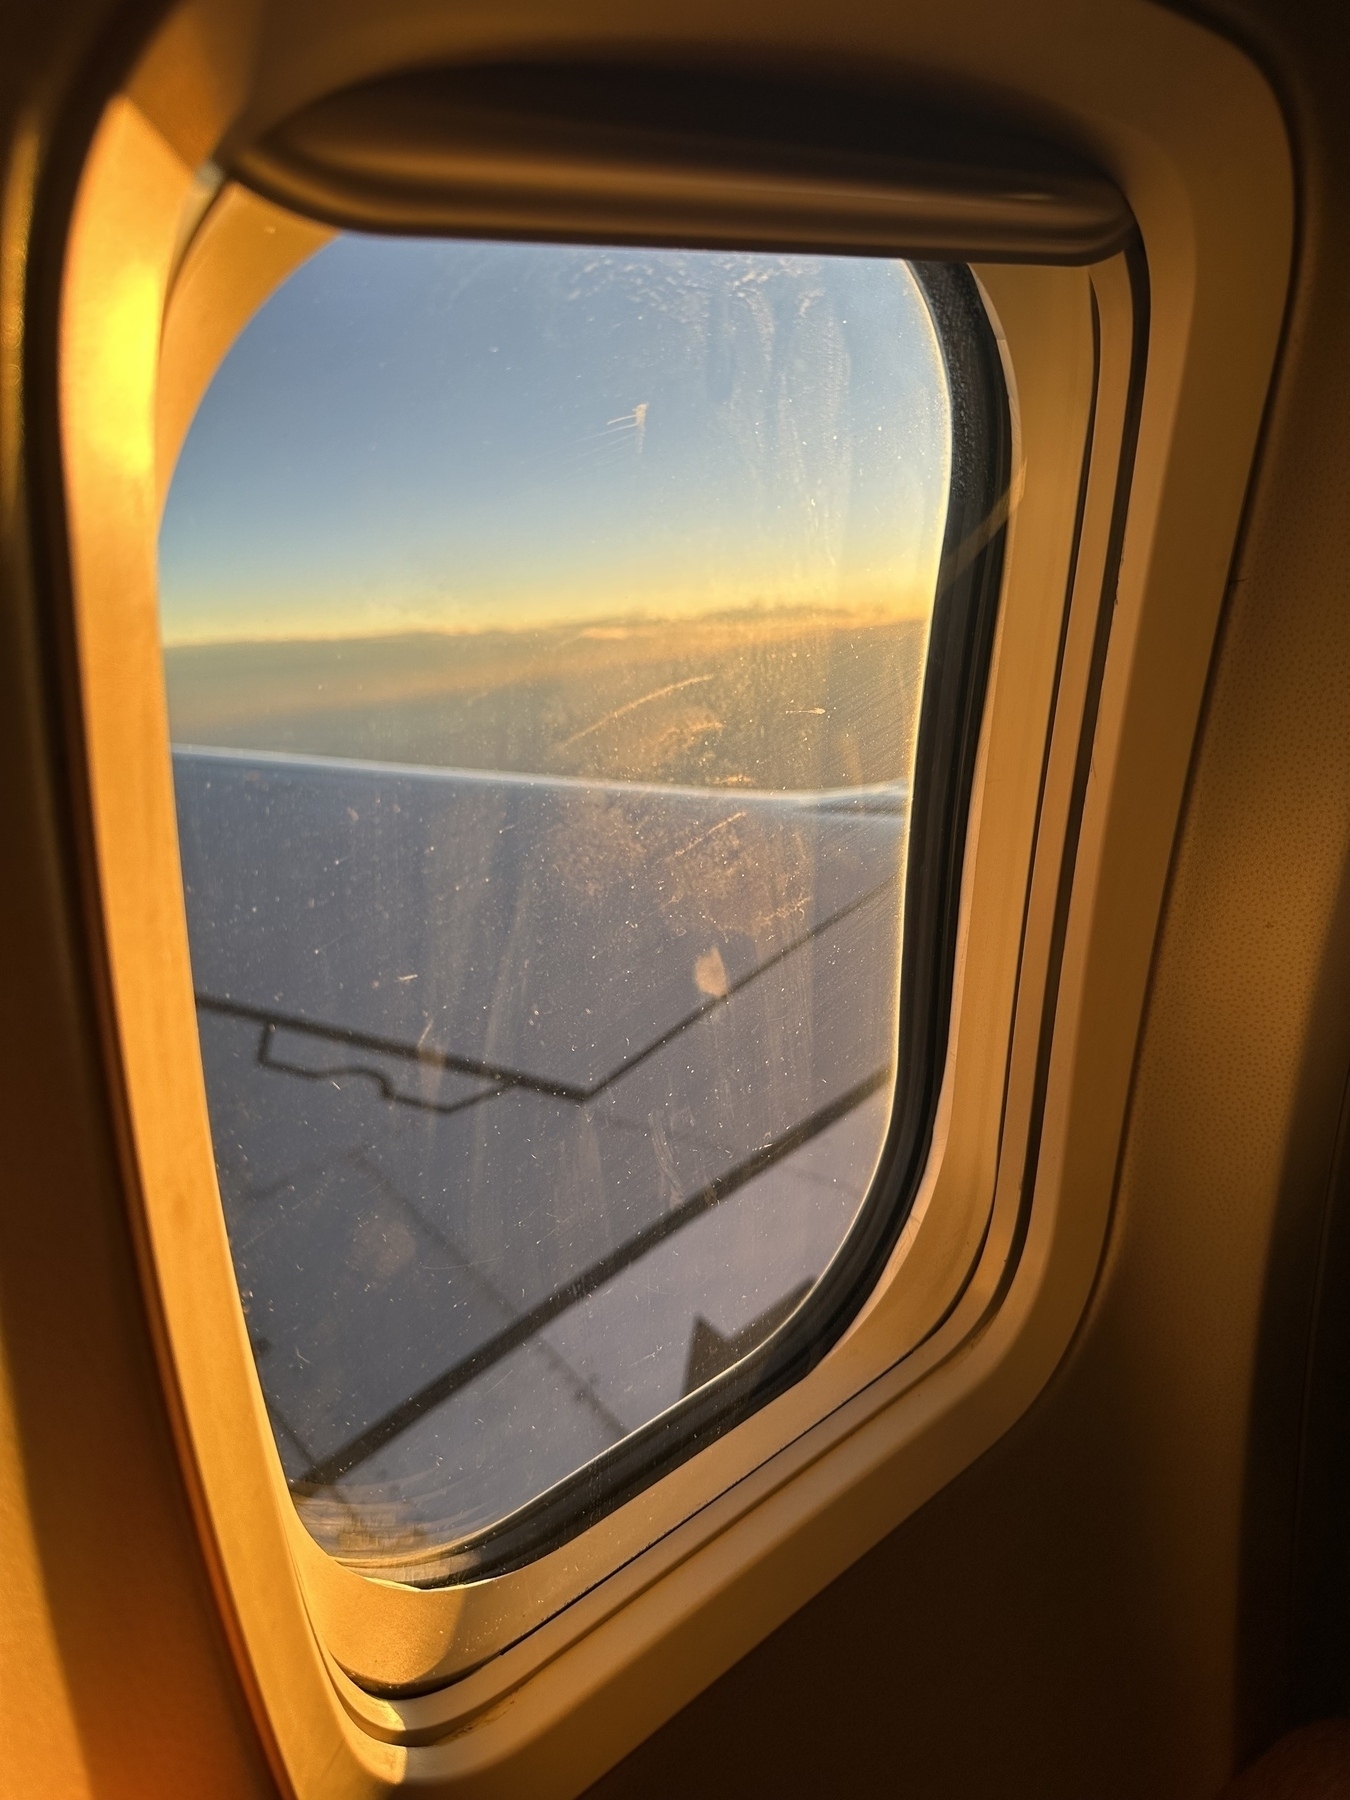 Sunrise airplane view of LA